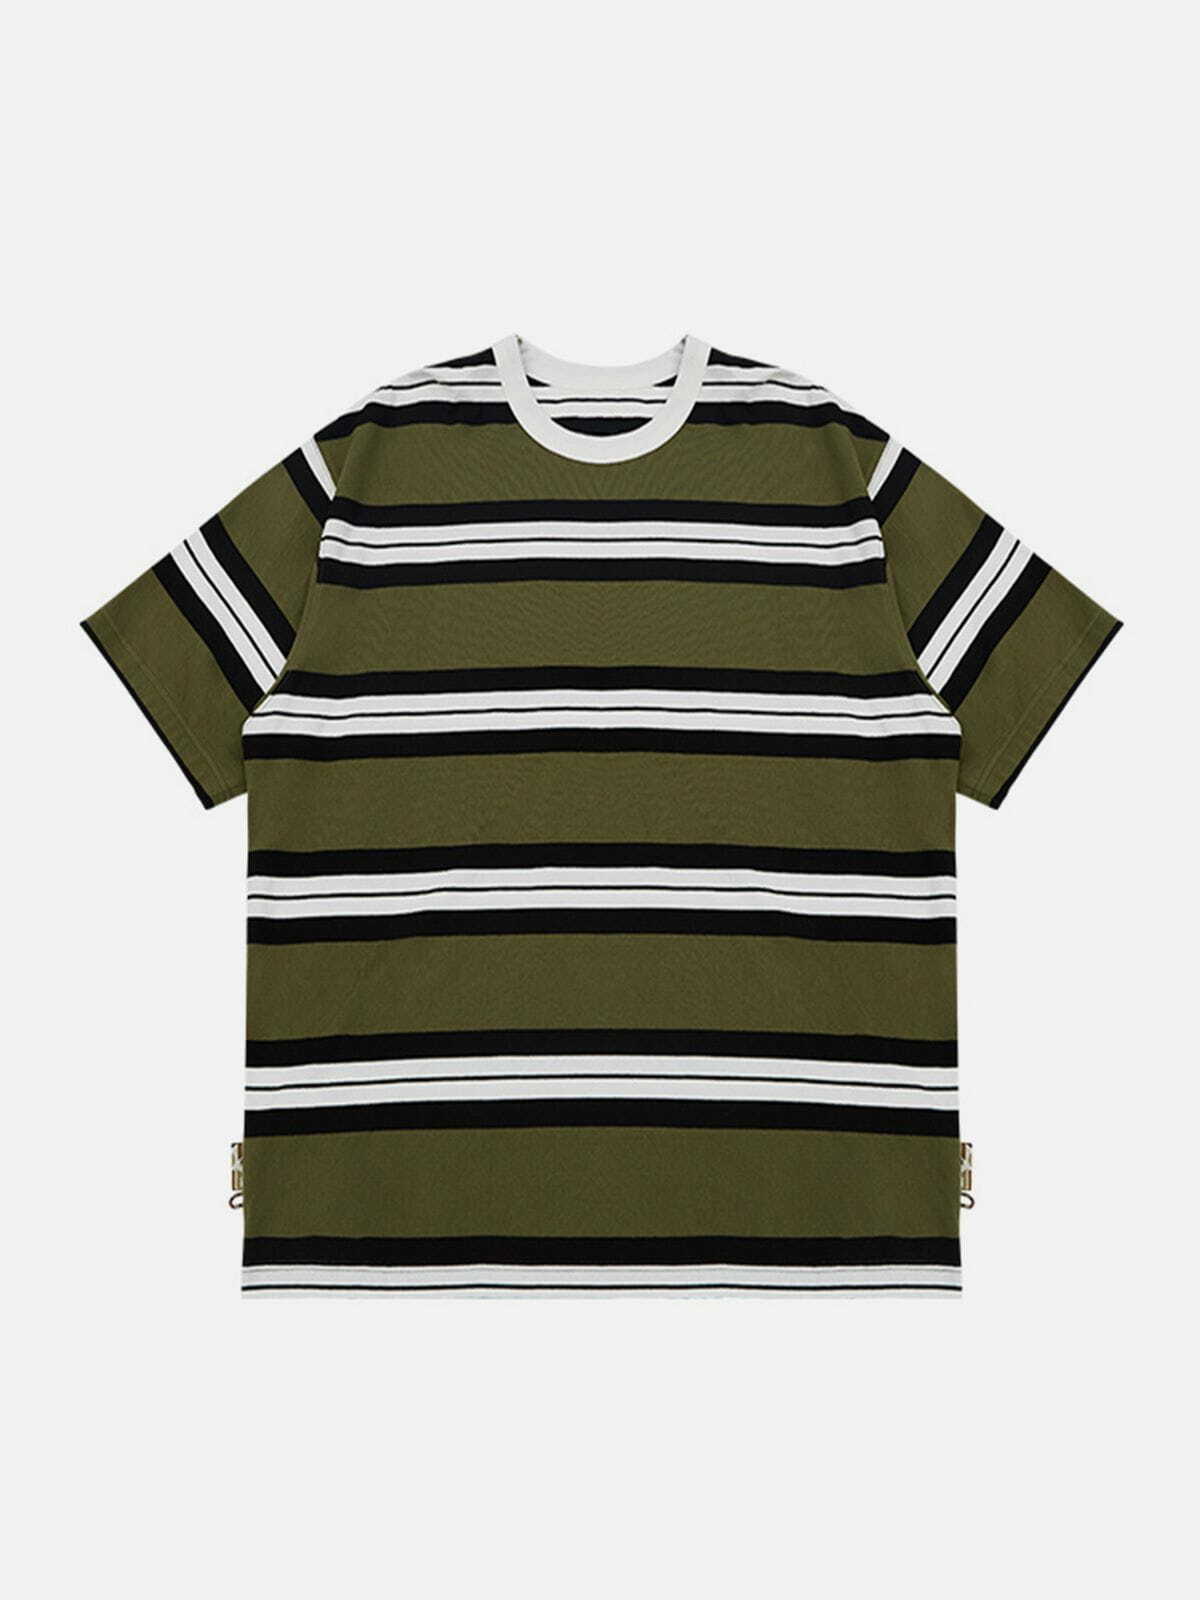 vibrant stripes print tee retro streetwear essential 7845